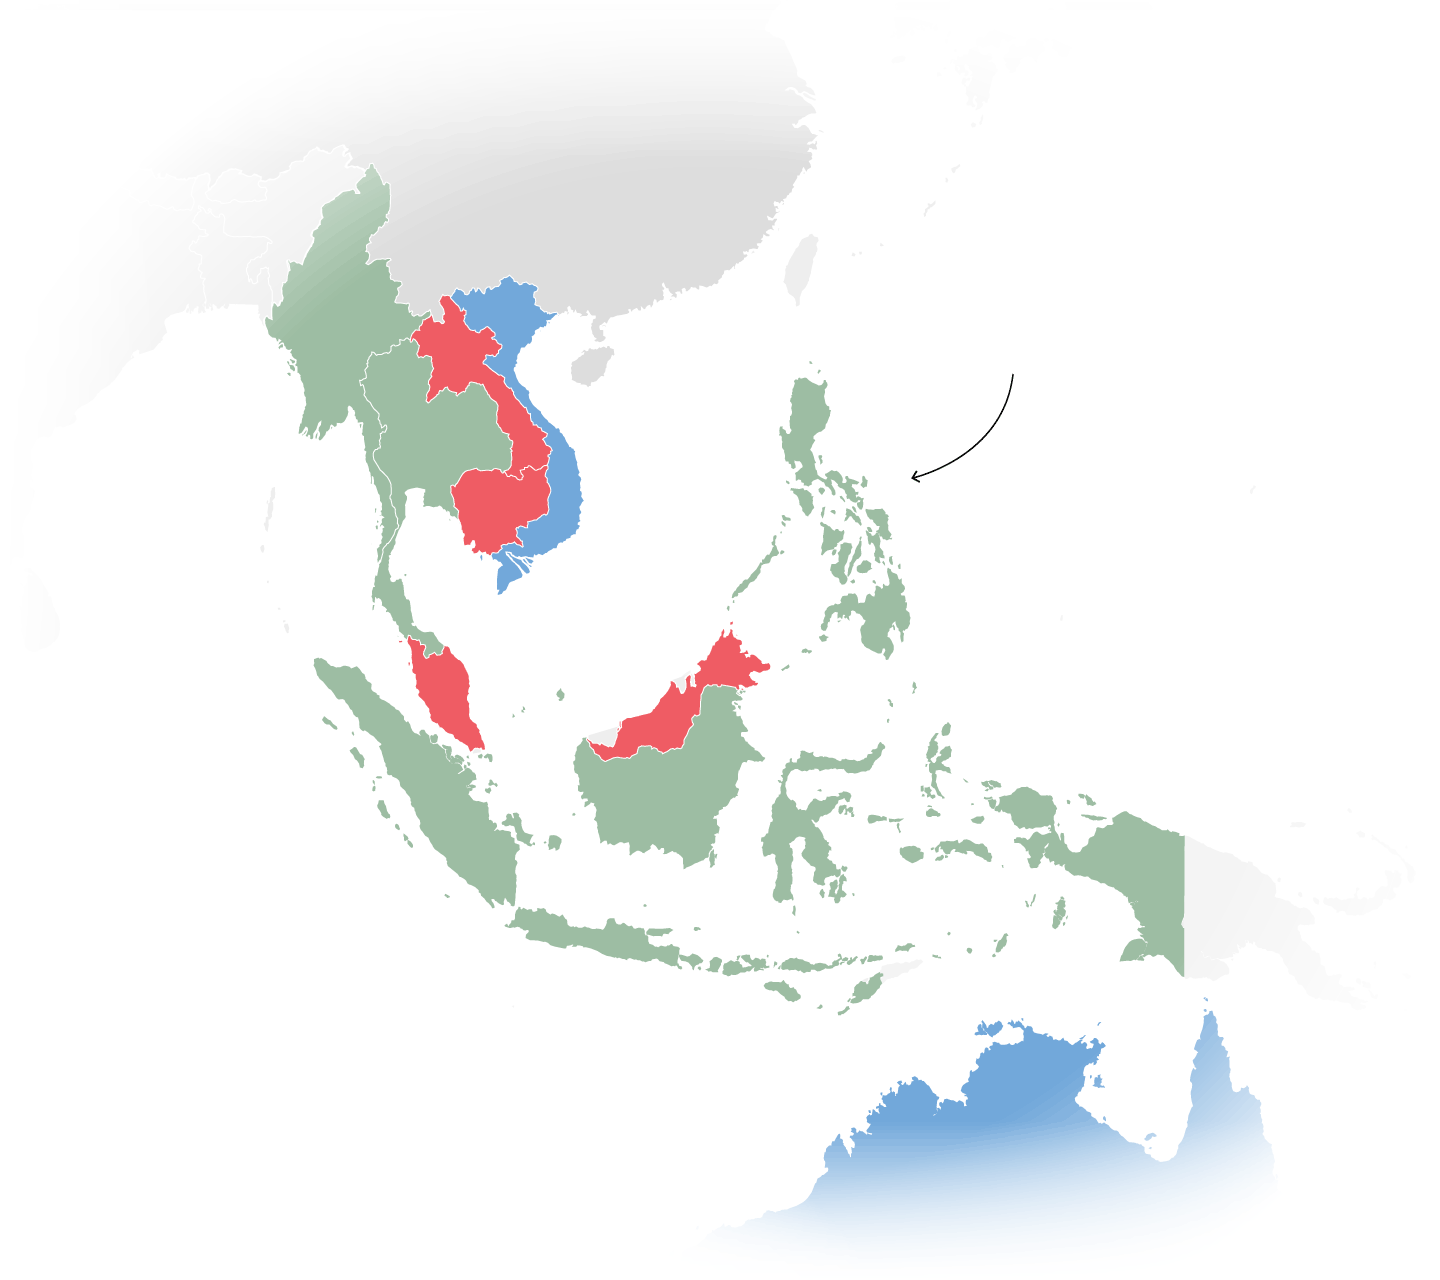 Asian political influence